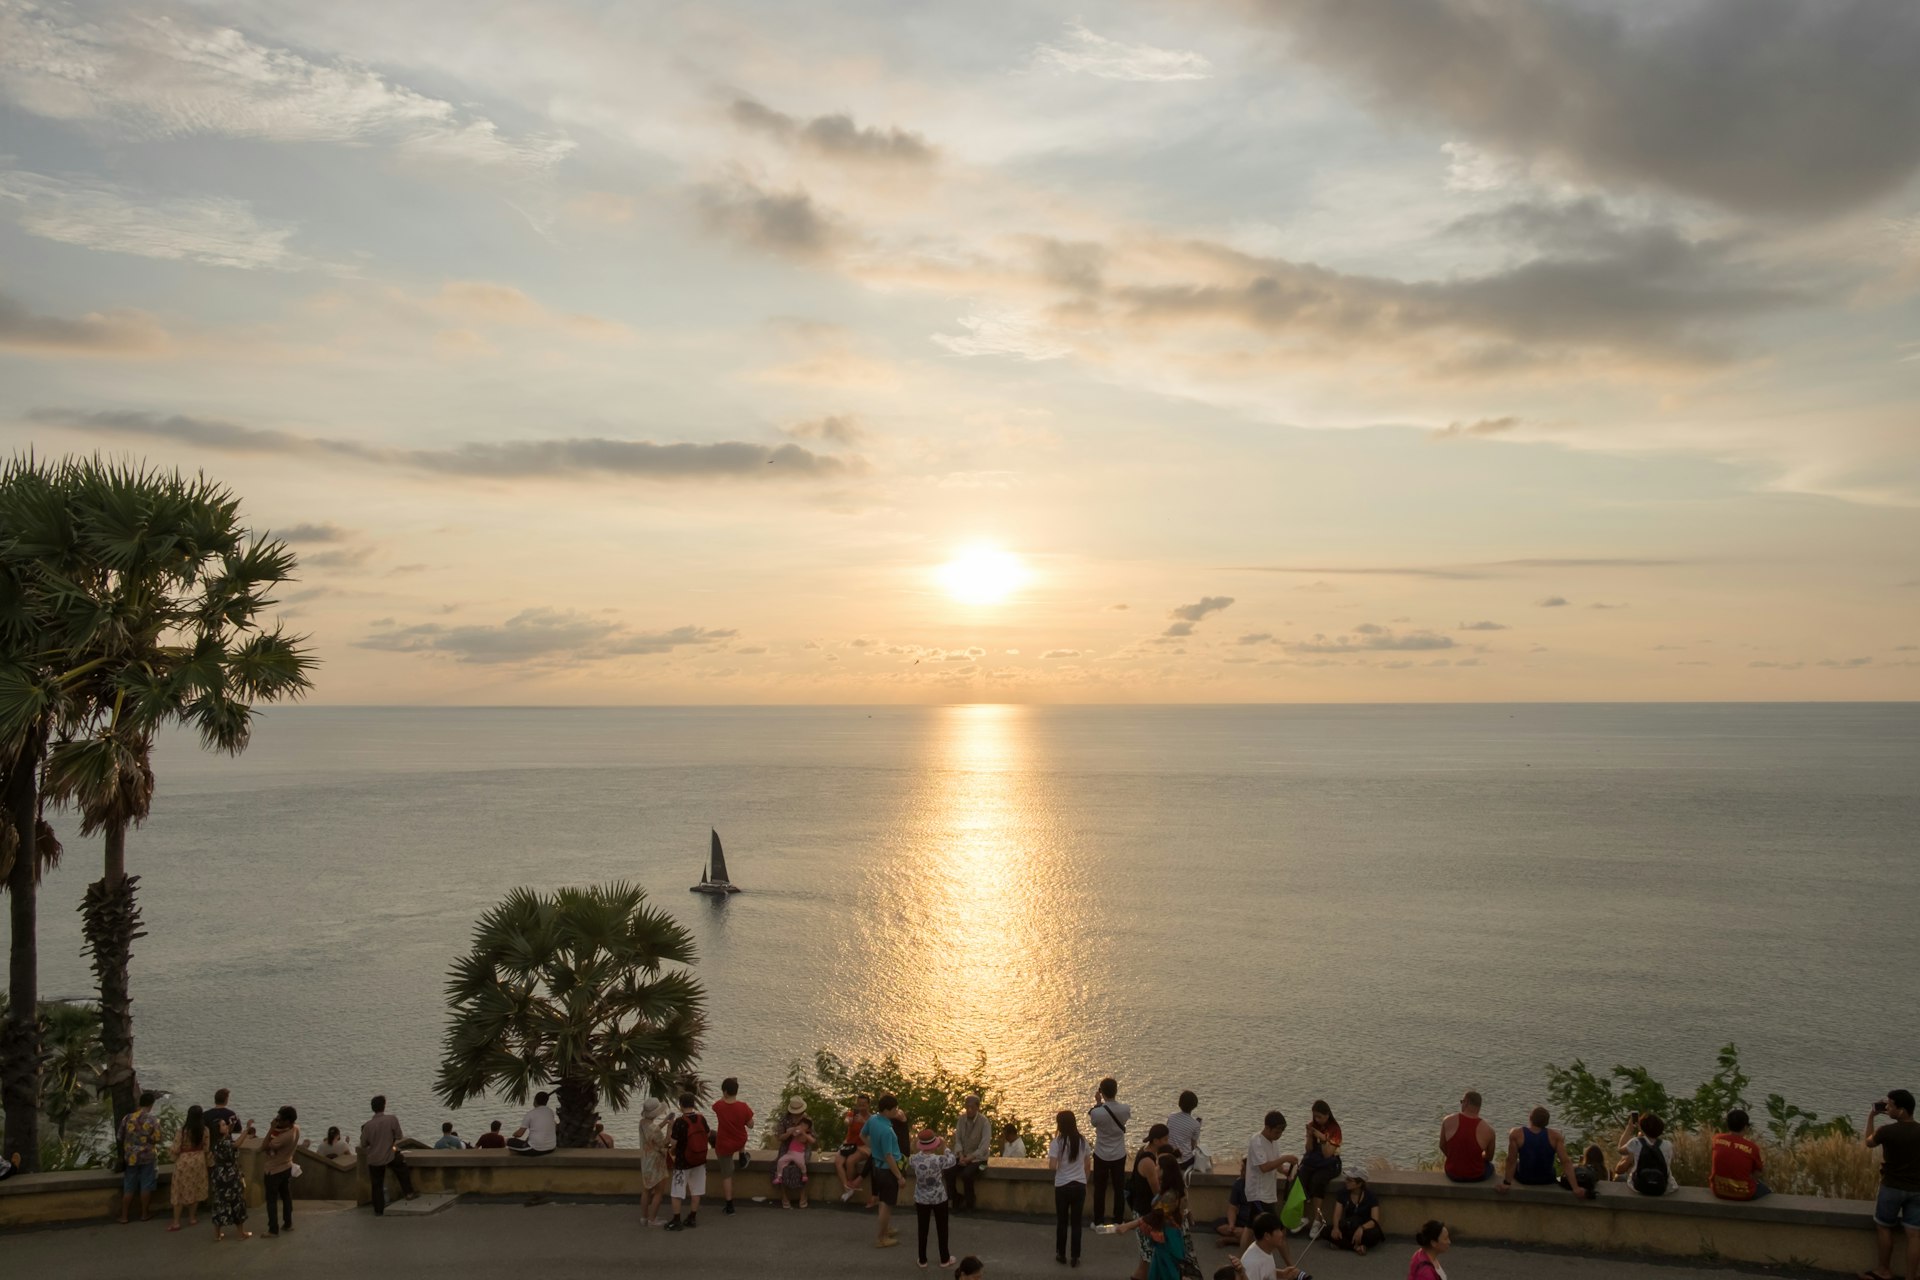 Tourists gather to watch the sunset on the Arabian Sea, Laem Phromthep, Phuket, Thailand